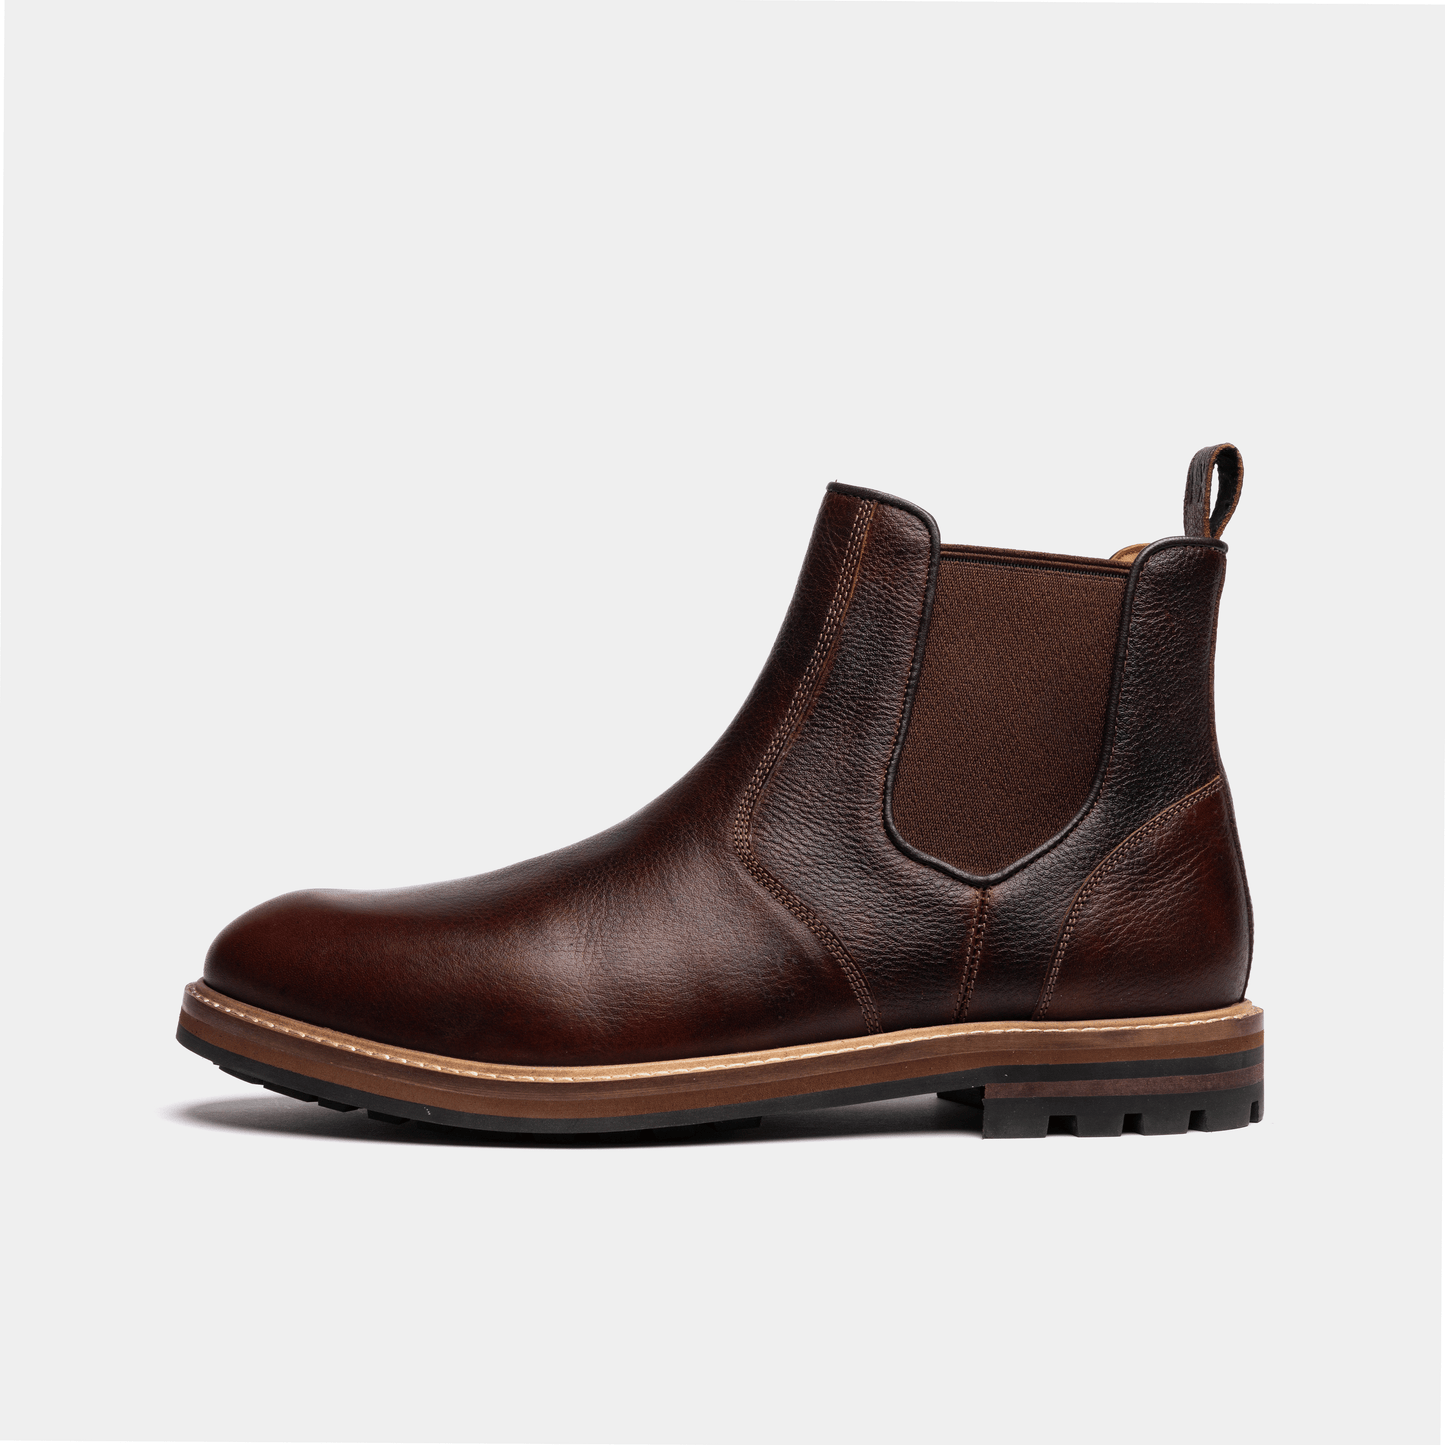 HOGHTON // CHESTNUT GRAINED-MEN'S SHOE | LANX Proper Men's Shoes